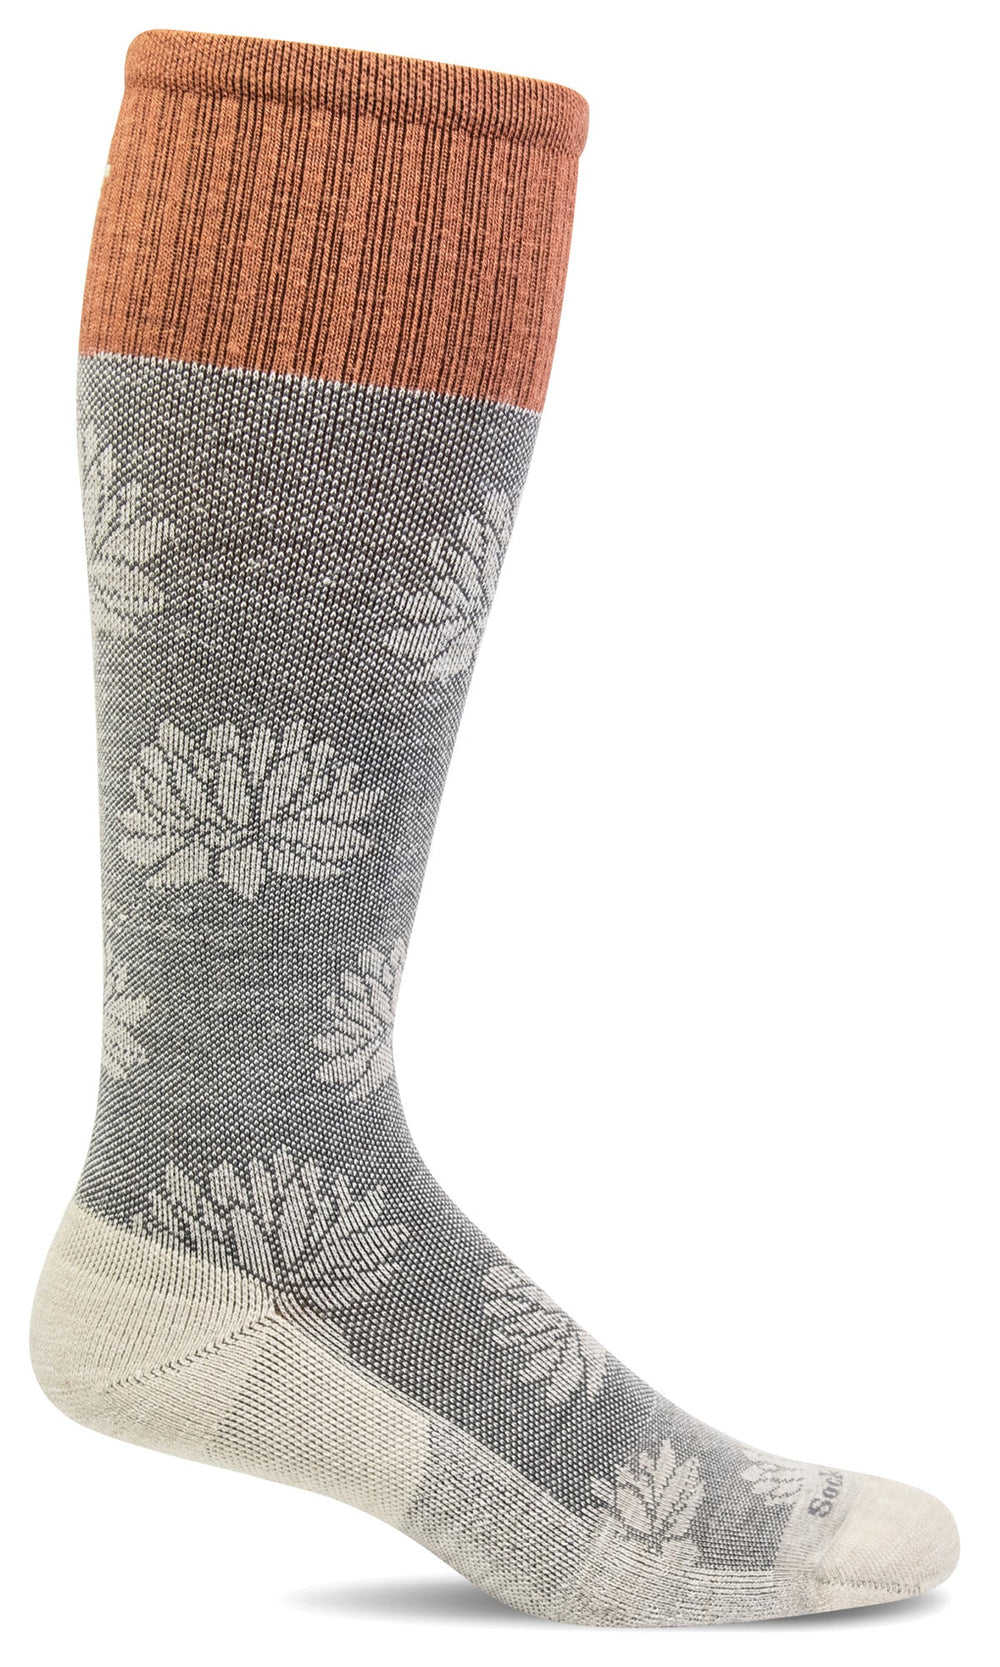 Sockwell Men's Pulse Firm Graduated Compression Socks, Grey, Large X-Large